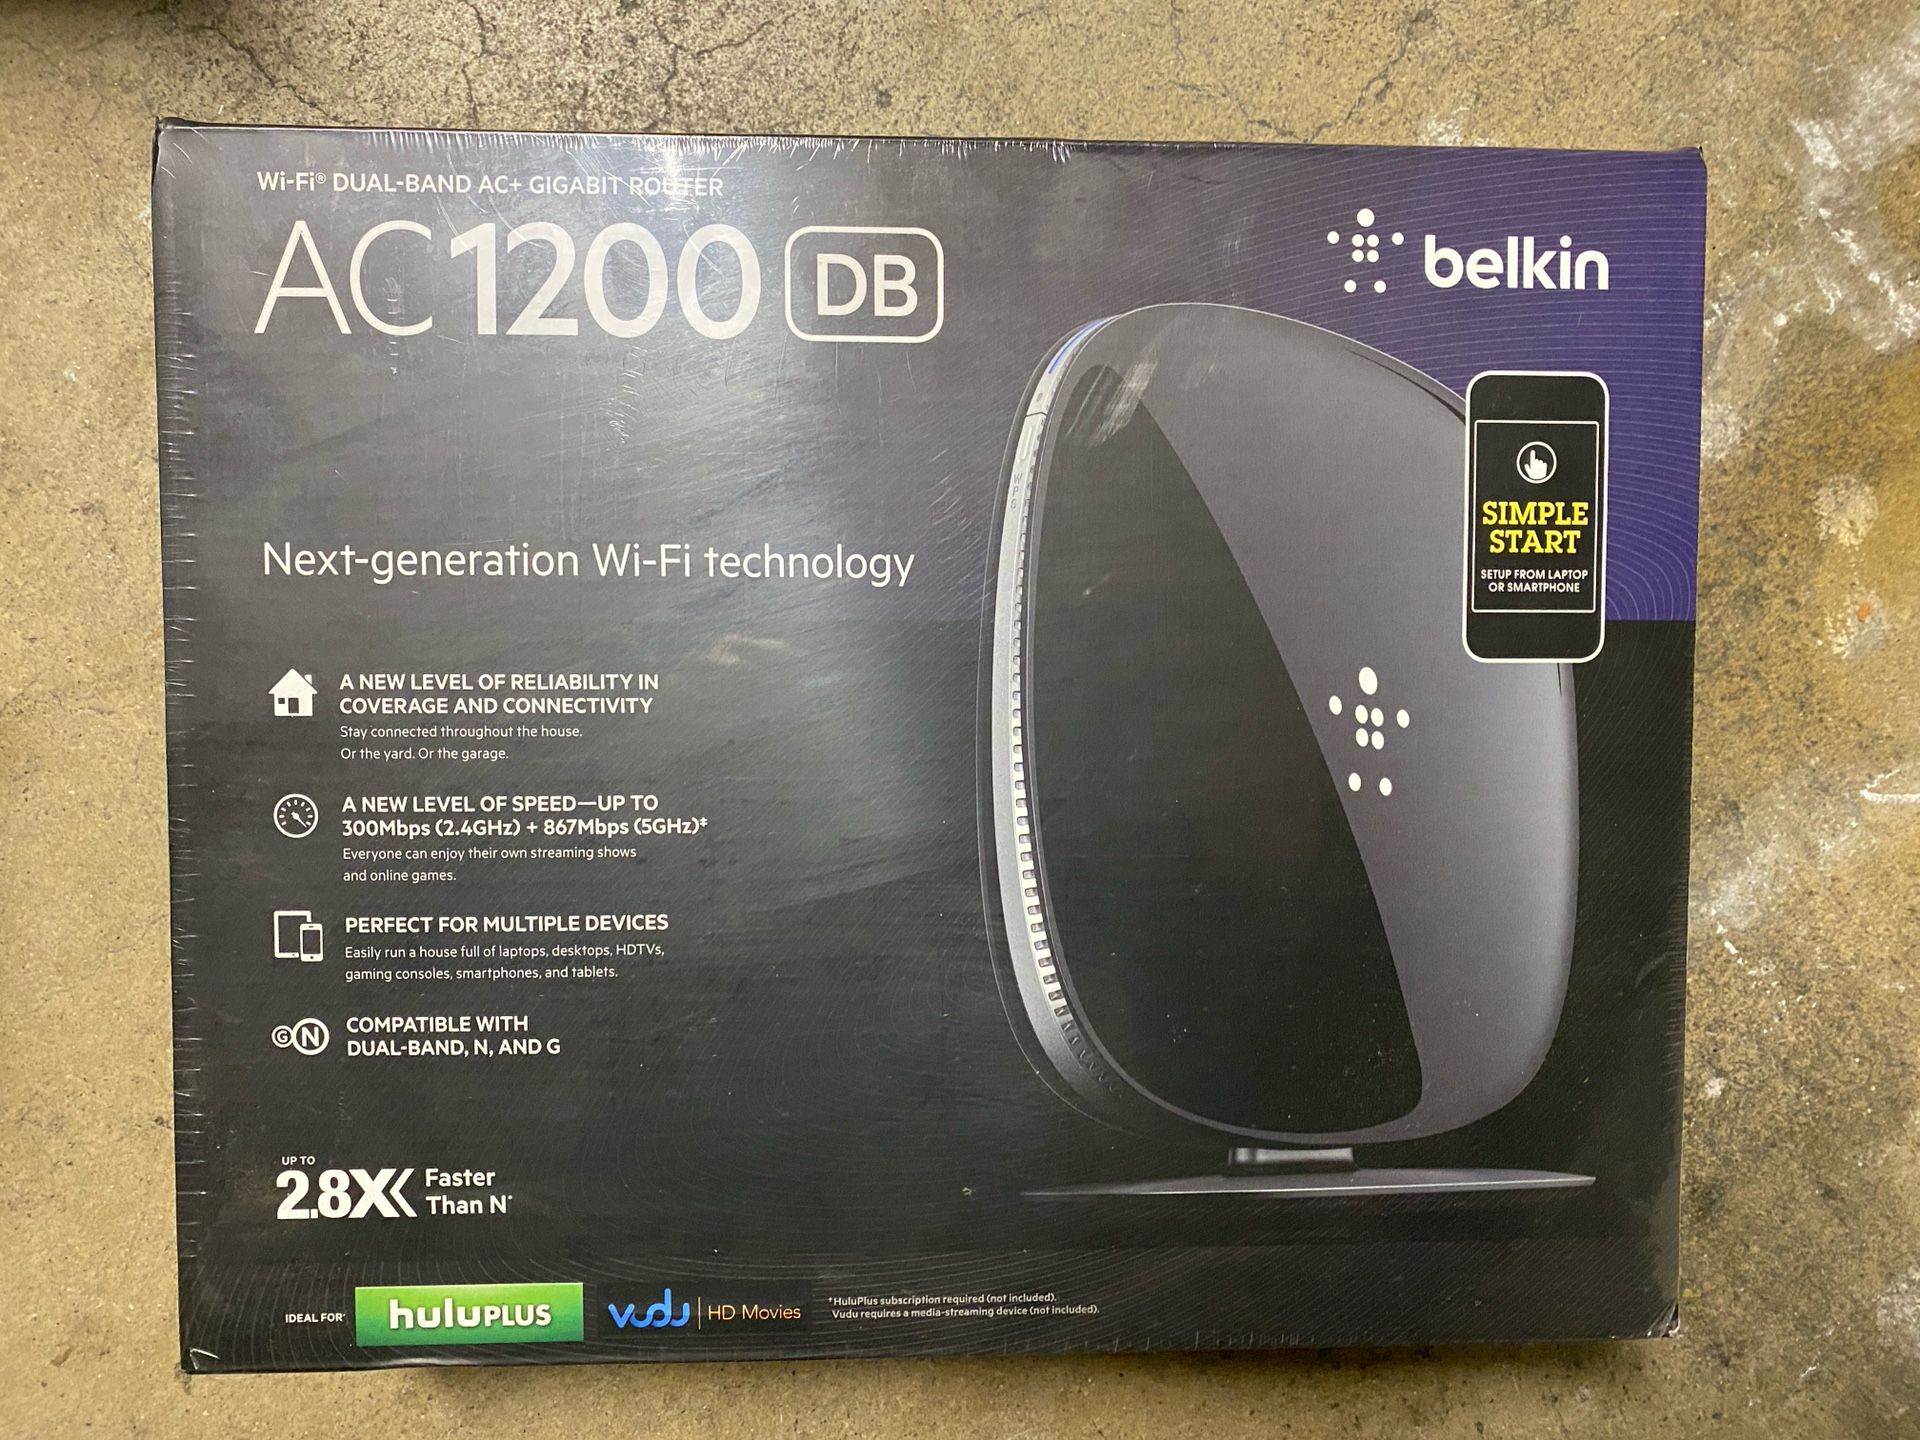 Belkin AC 1200 DB Wi-Fi Dual-Band AC+ Gigabit Router 